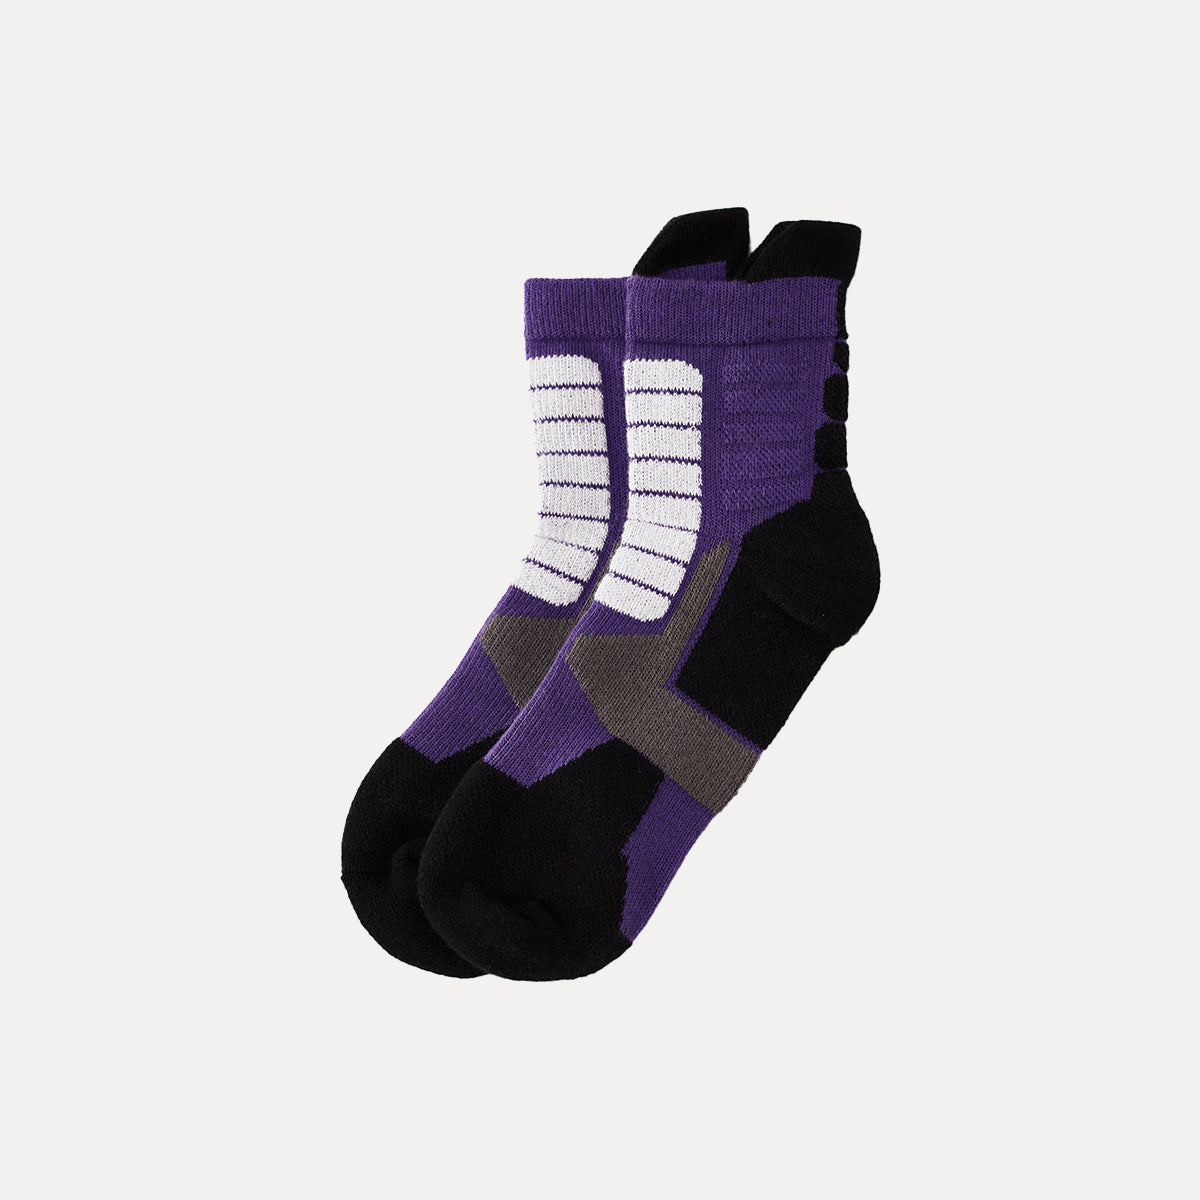 襪子 | ACTIVE 船員襪 - 紫色